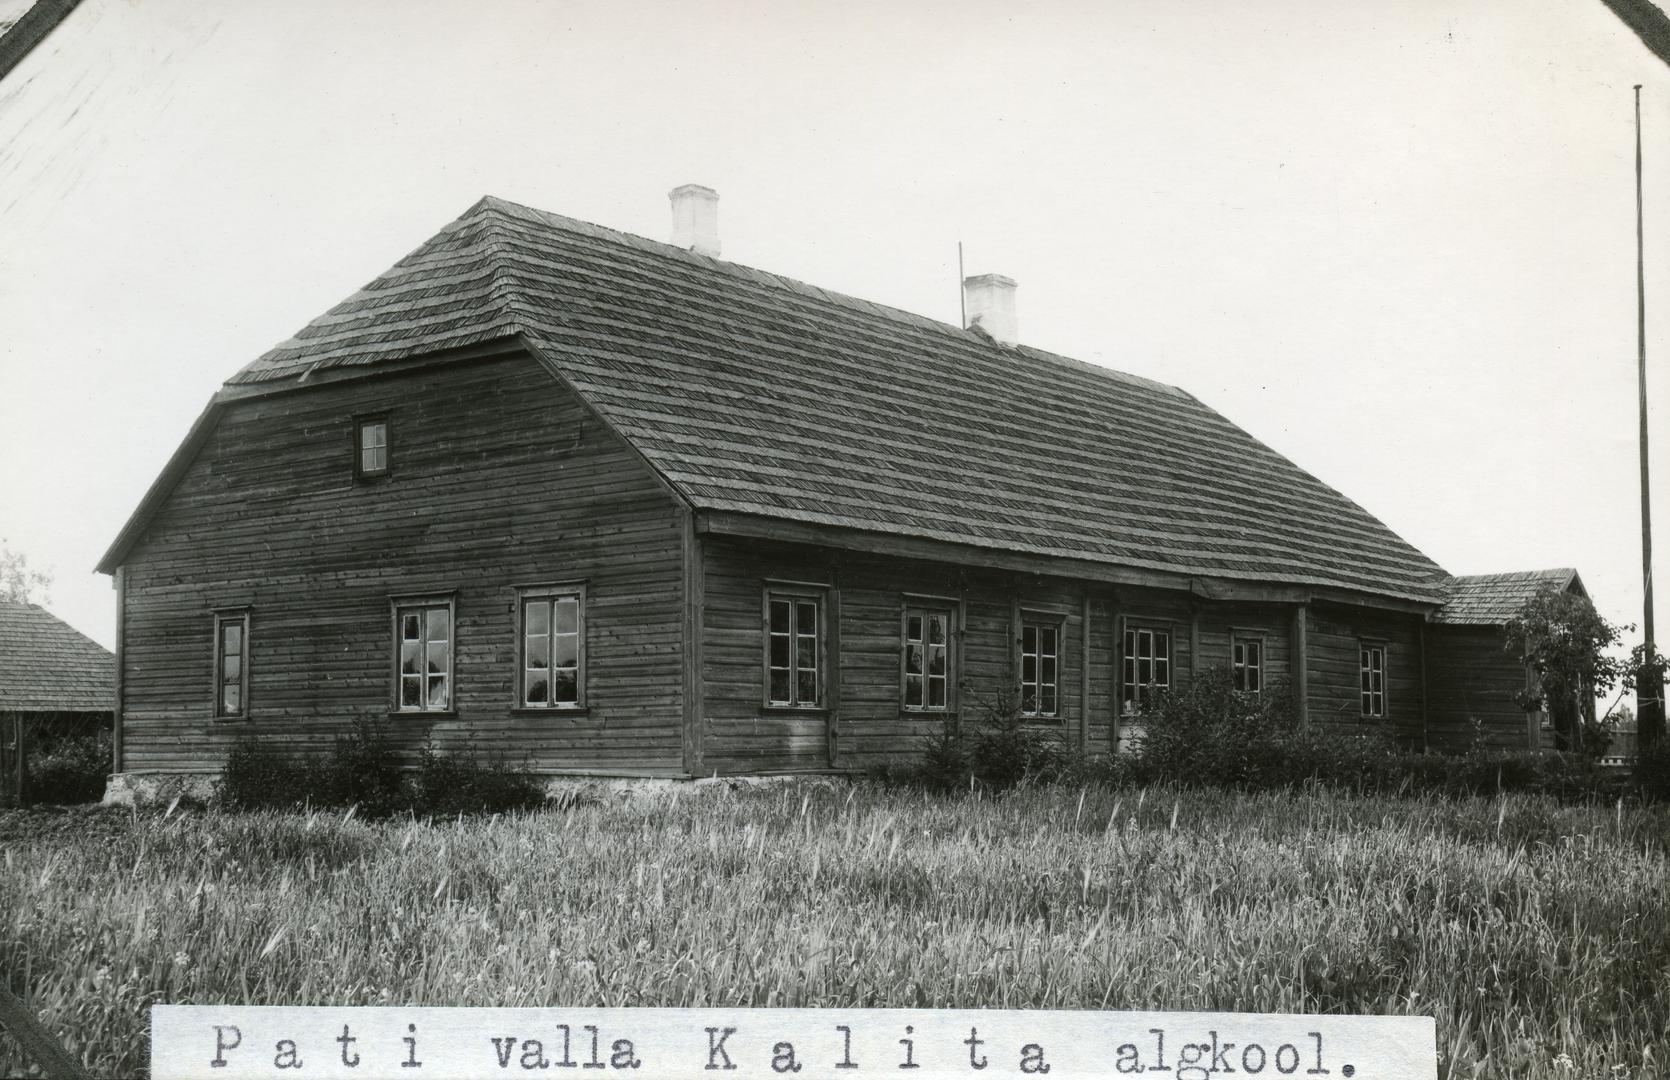 Pati municipality Kalita 6-kl Algkooli building